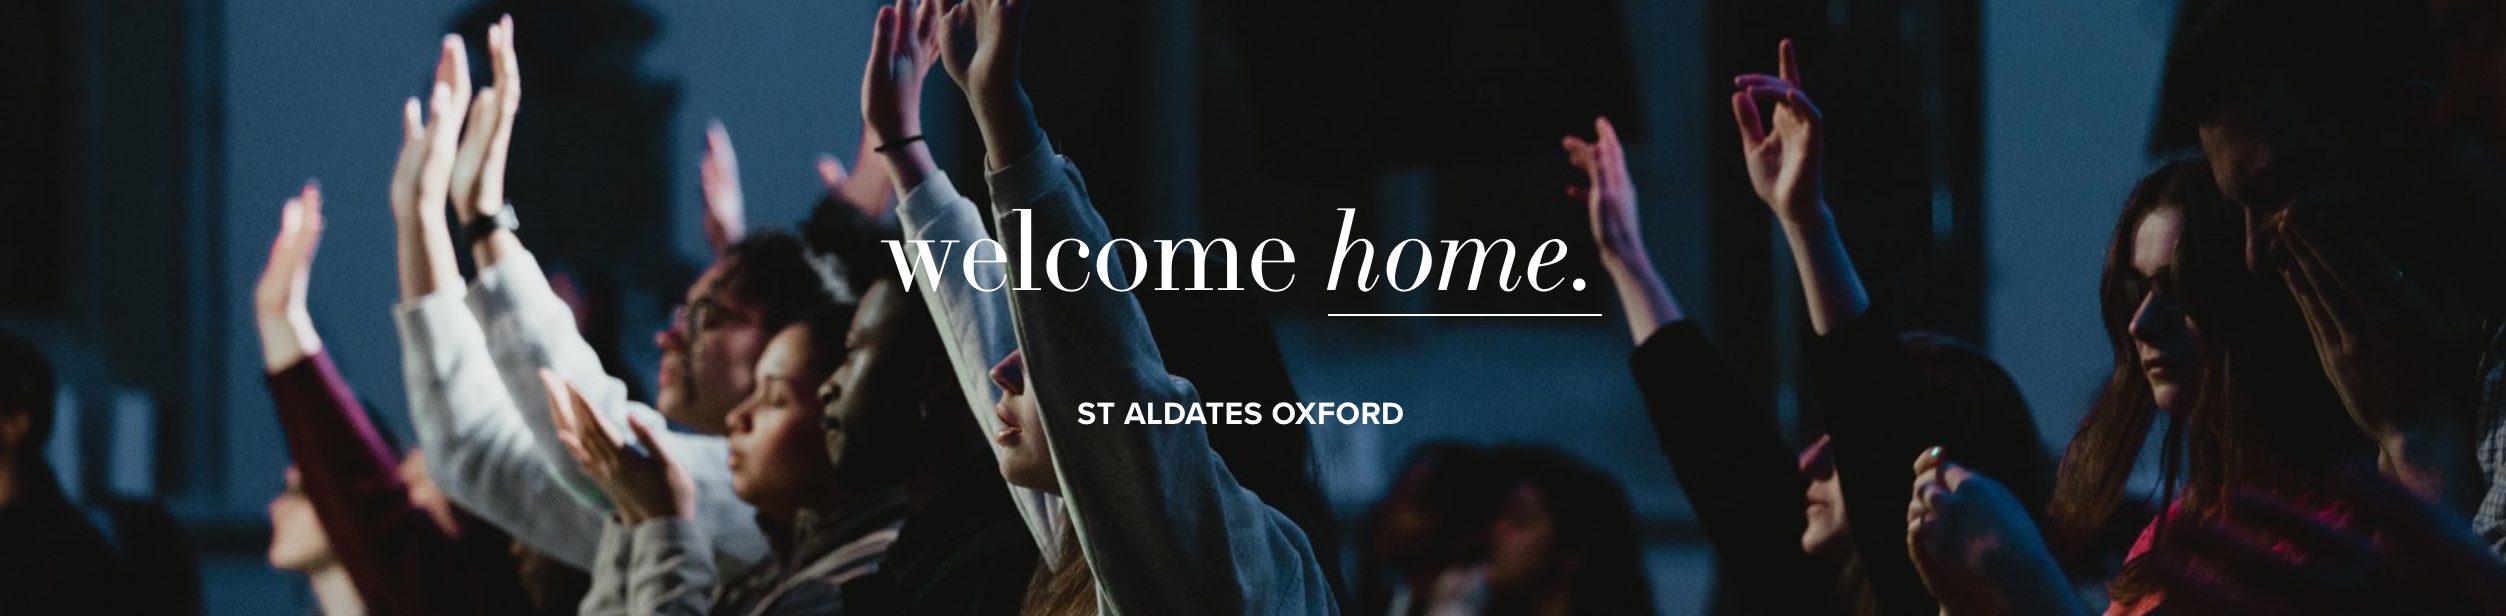 St Aldates Oxford